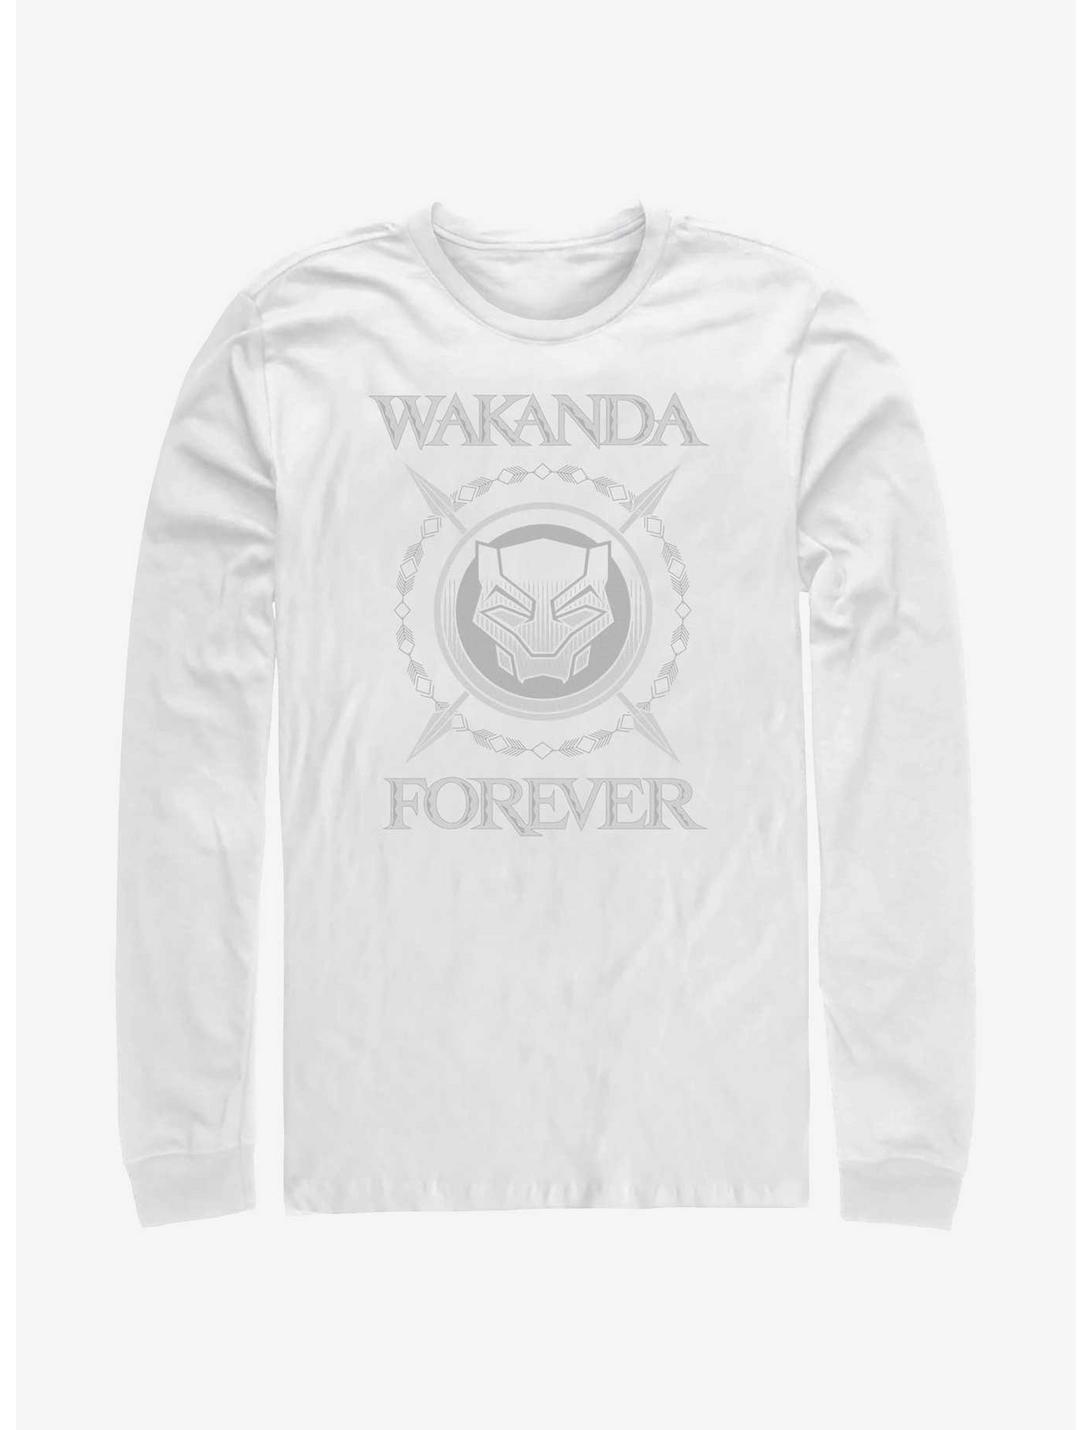 Marvel Black Panther: Wakanda Forever Crossed Spears Logo Long-Sleeve T-Shirt, WHITE, hi-res